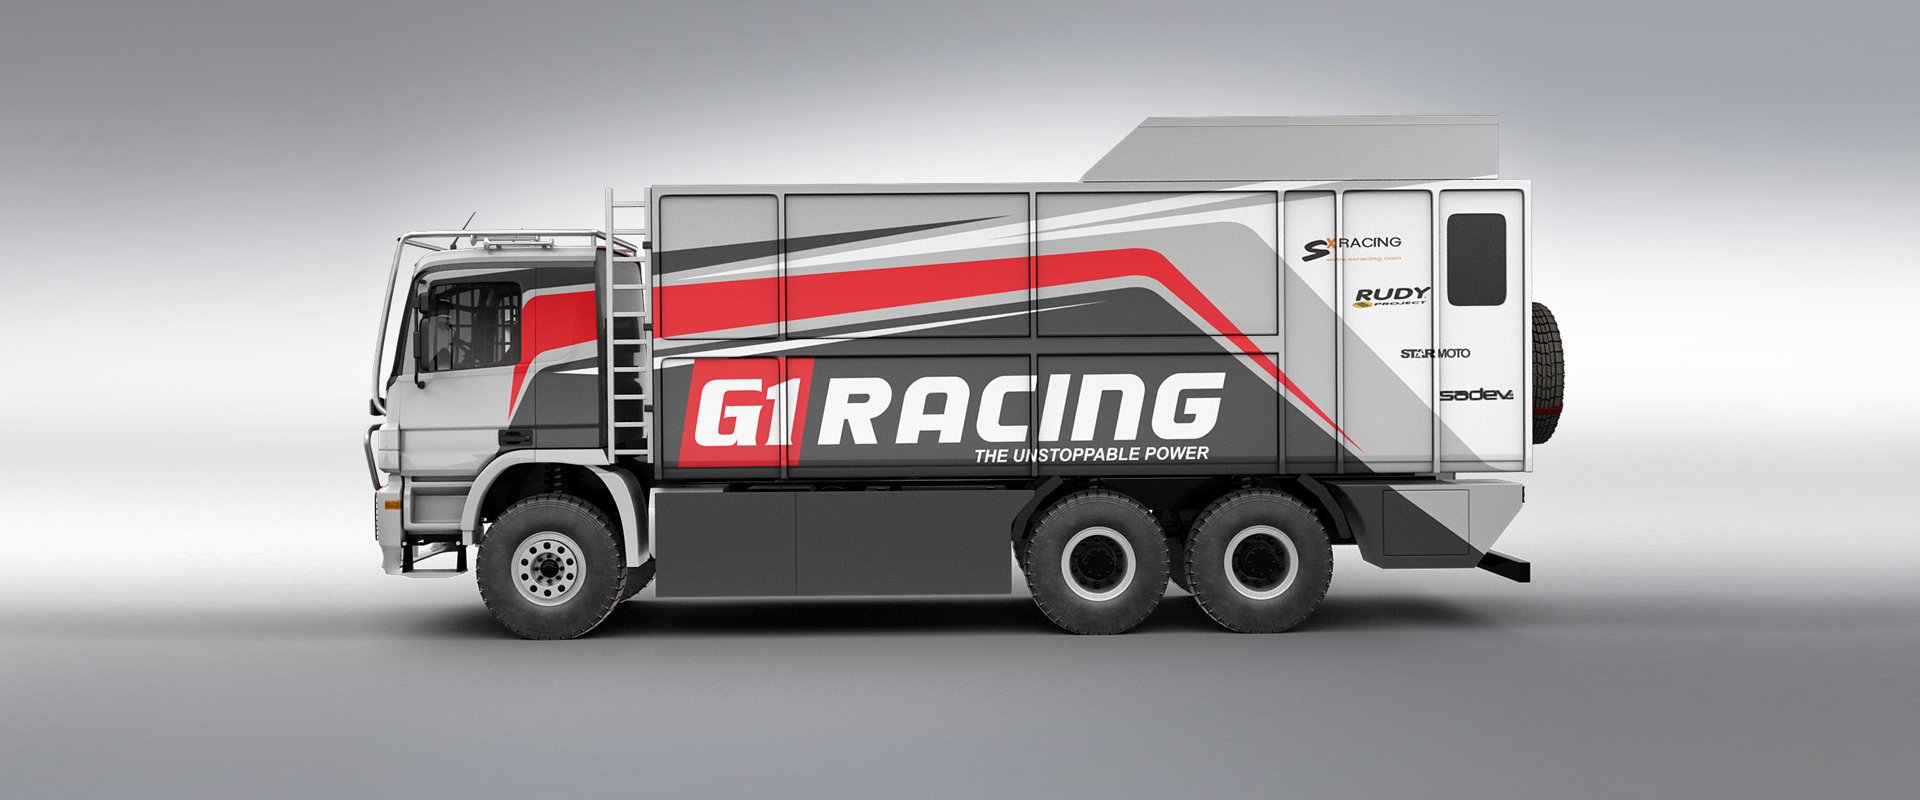 G1 Racing #2